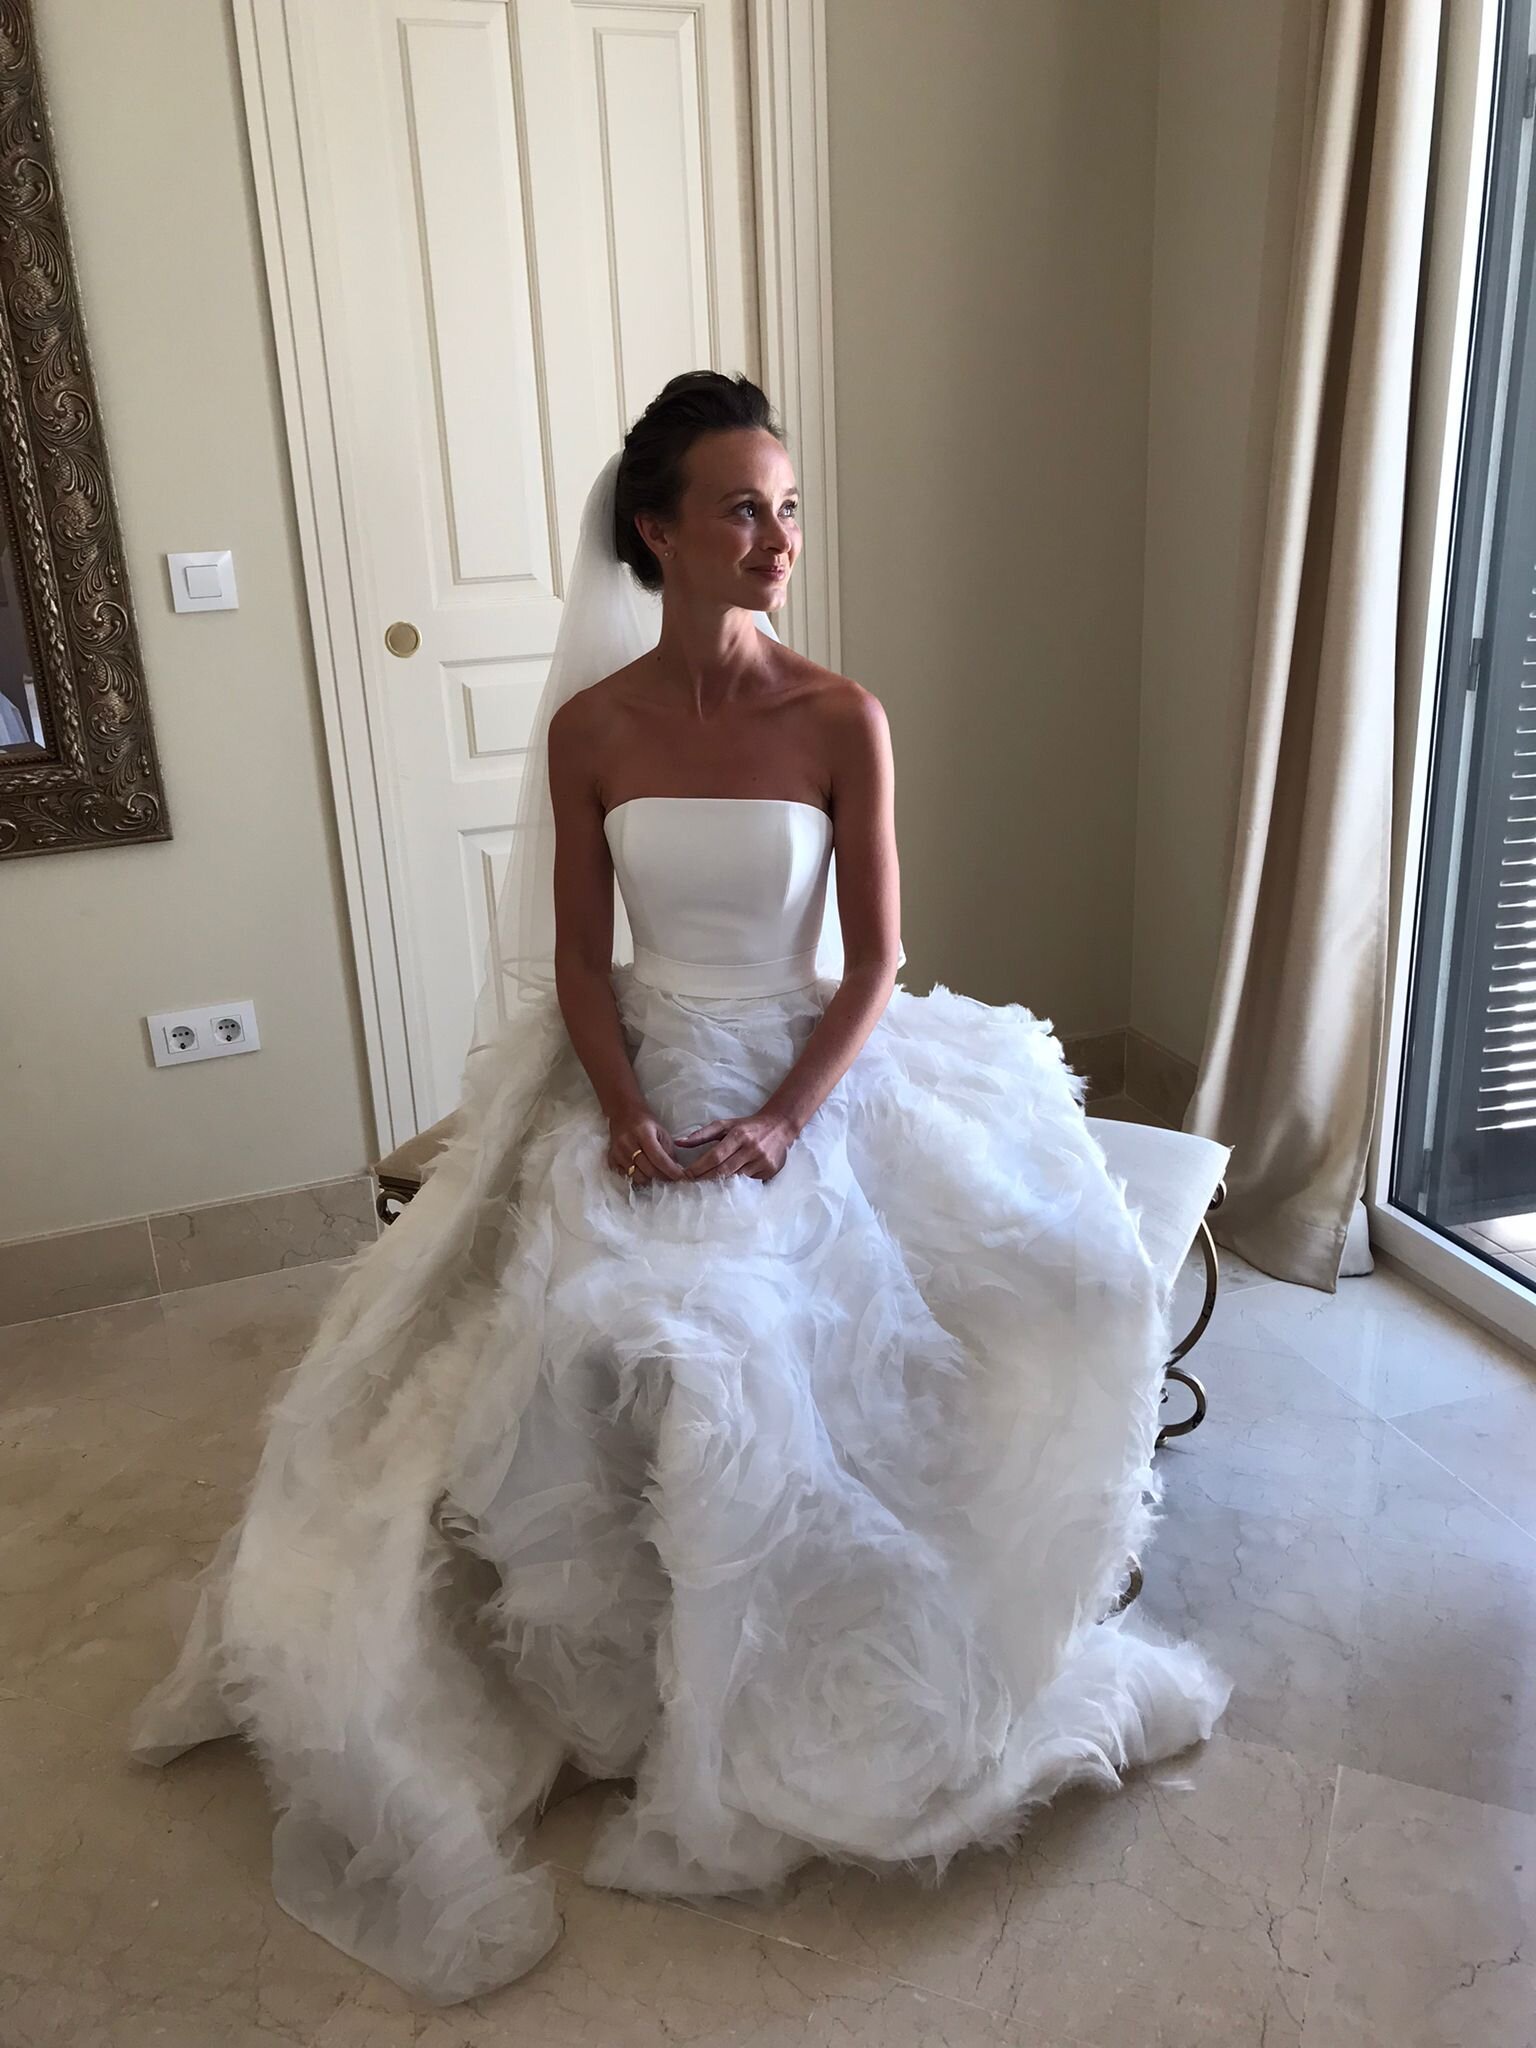 Beautiful bride Charlotte wore a wedding dress by Halfpenny London